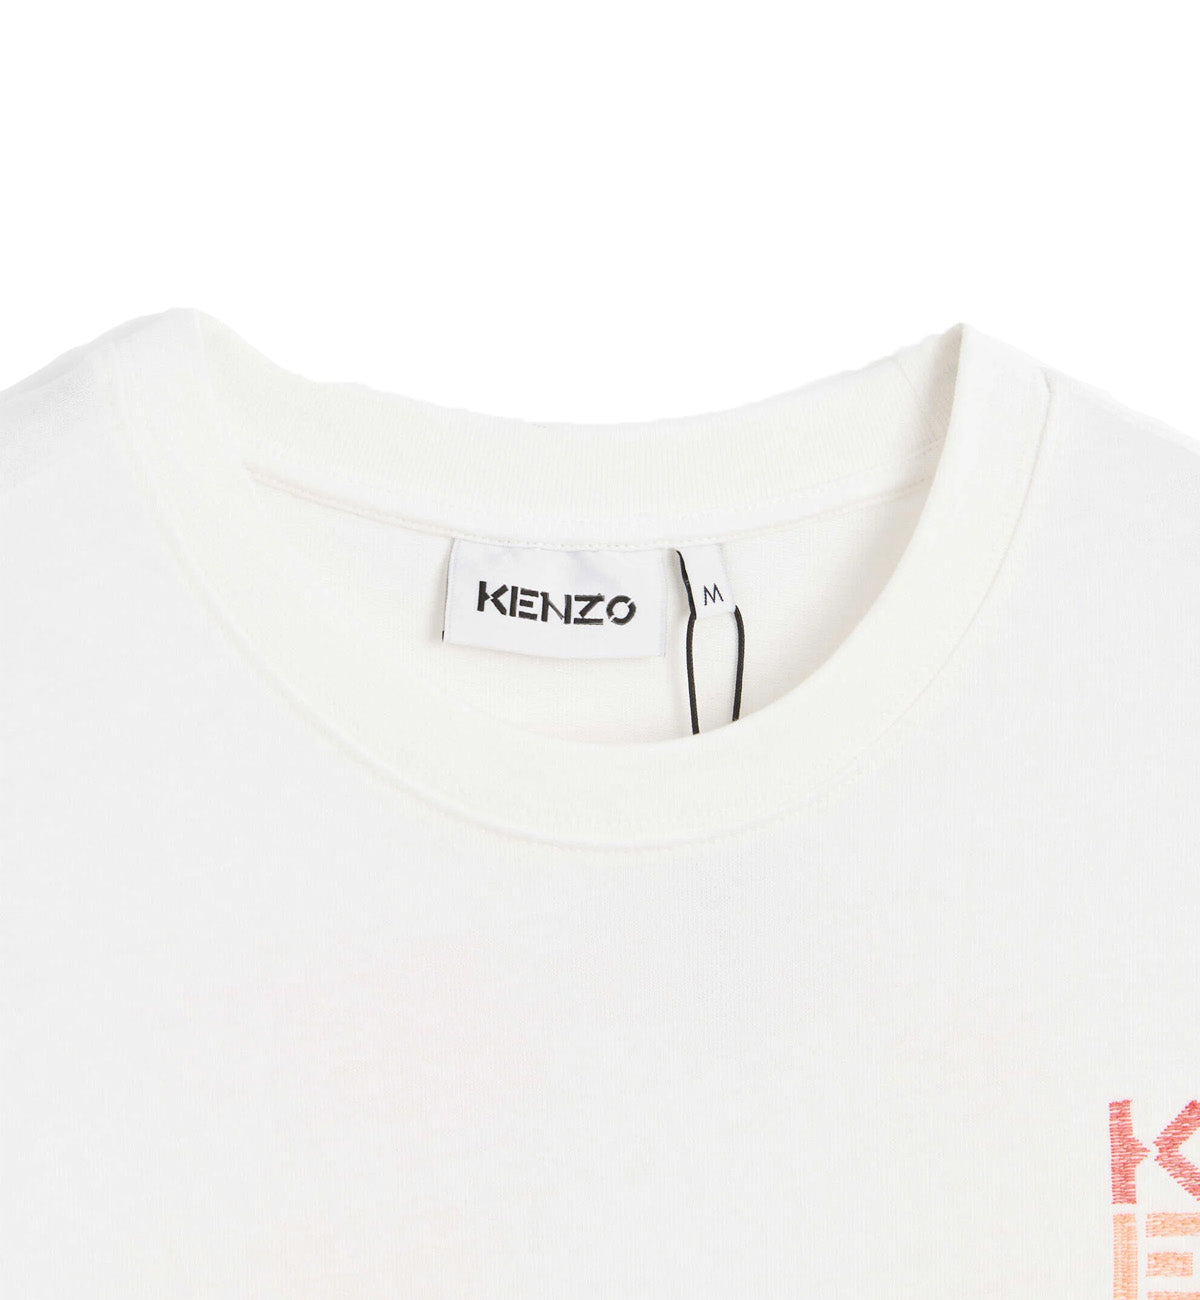 Kenzo Logo Loose Tee (White)